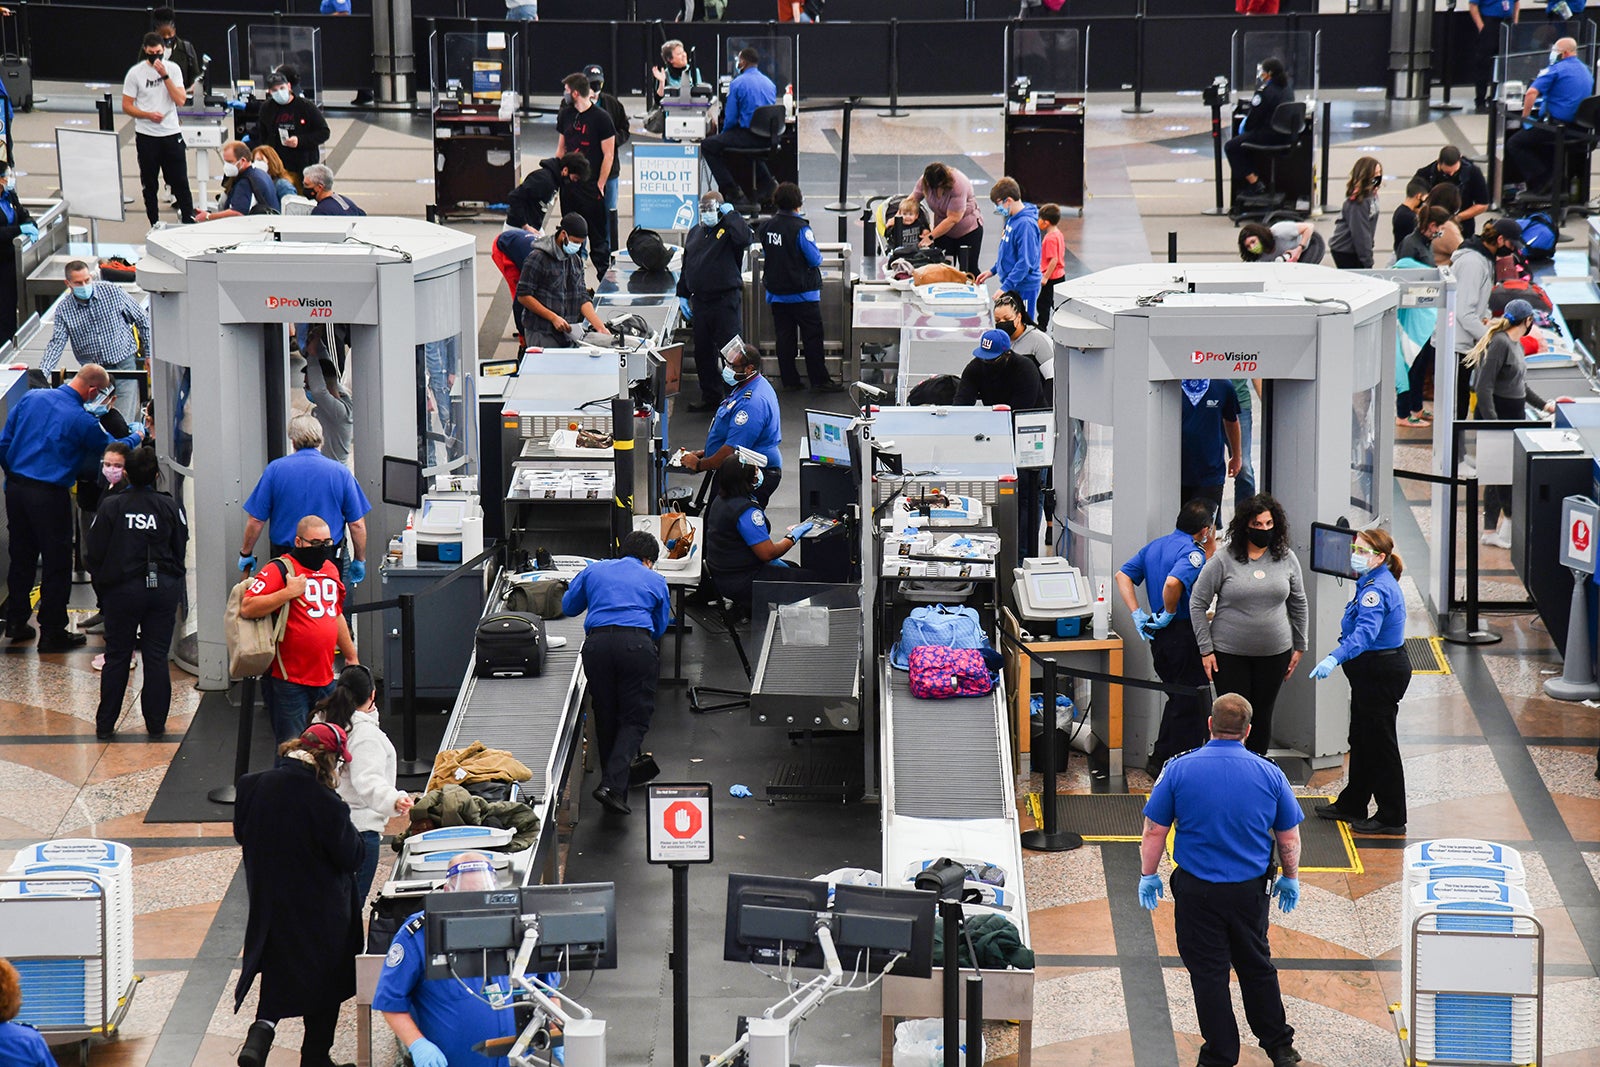 Denver Airport security